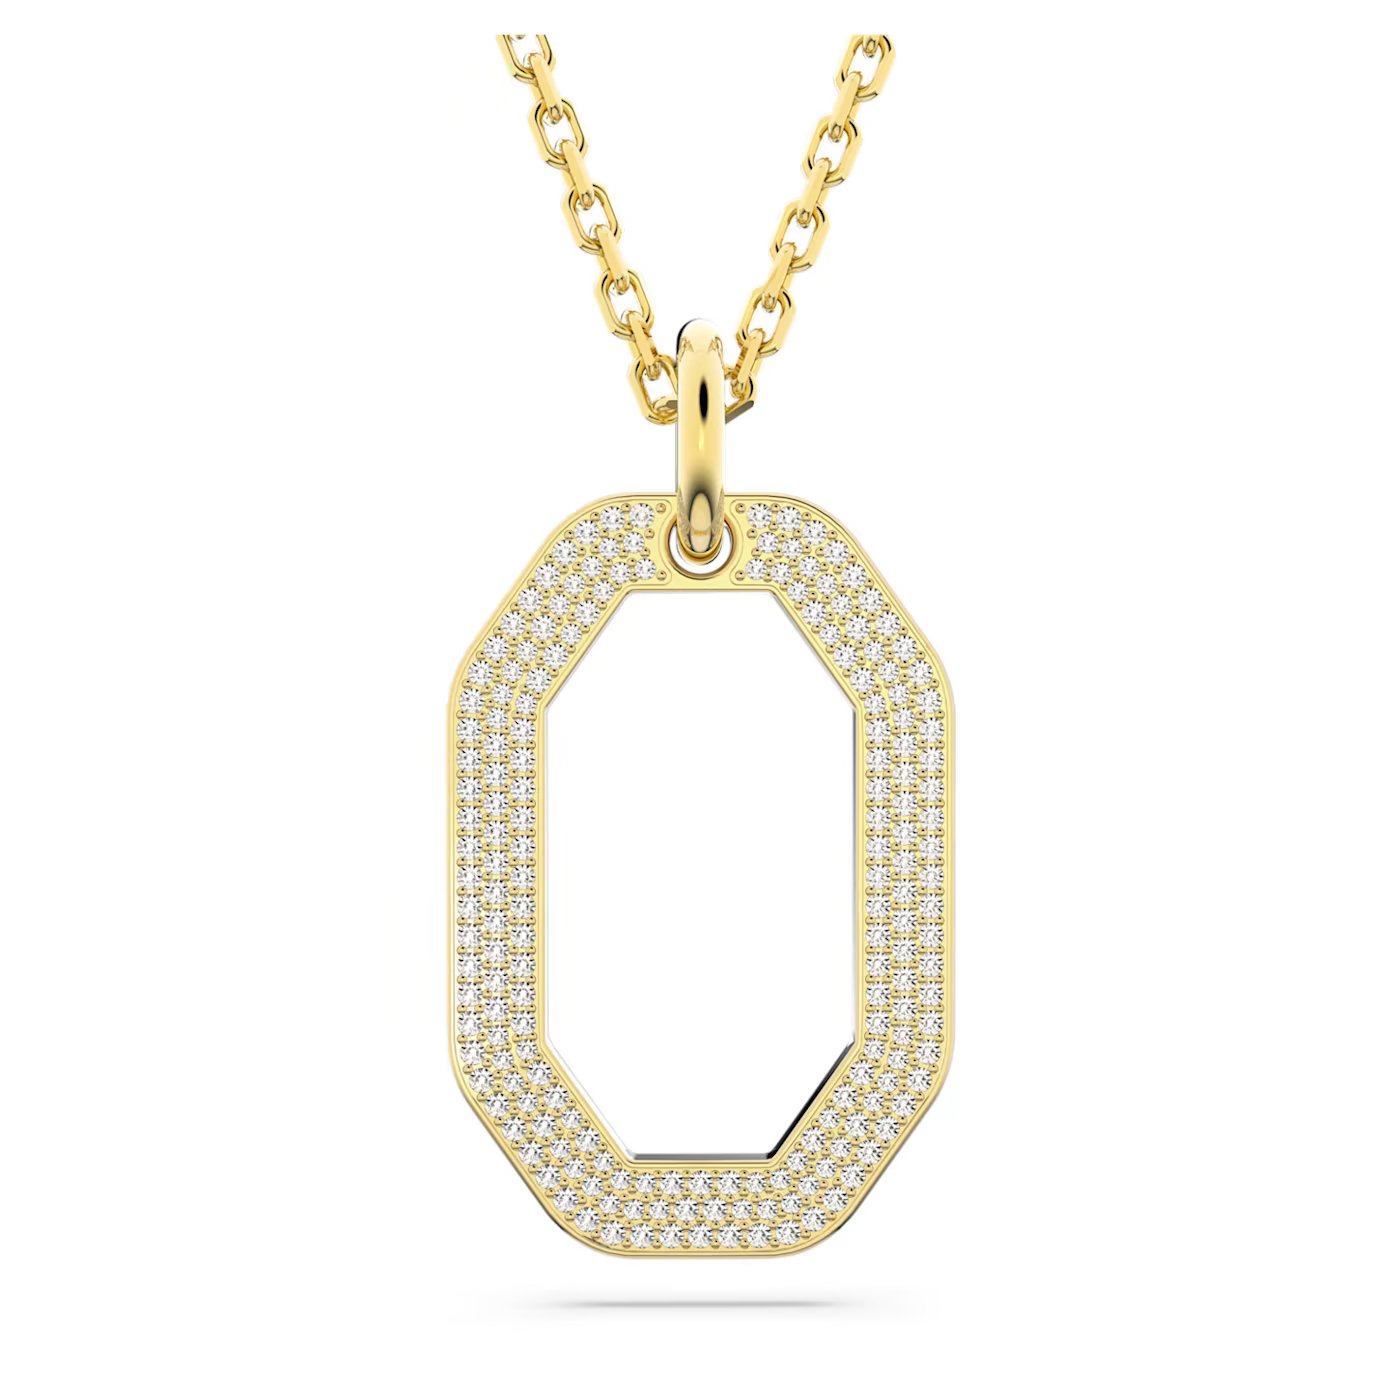 63c956ab92743_dextera-pendant--octagon-shape--white--gold-tone-plated-swarovski-5642387.jpg